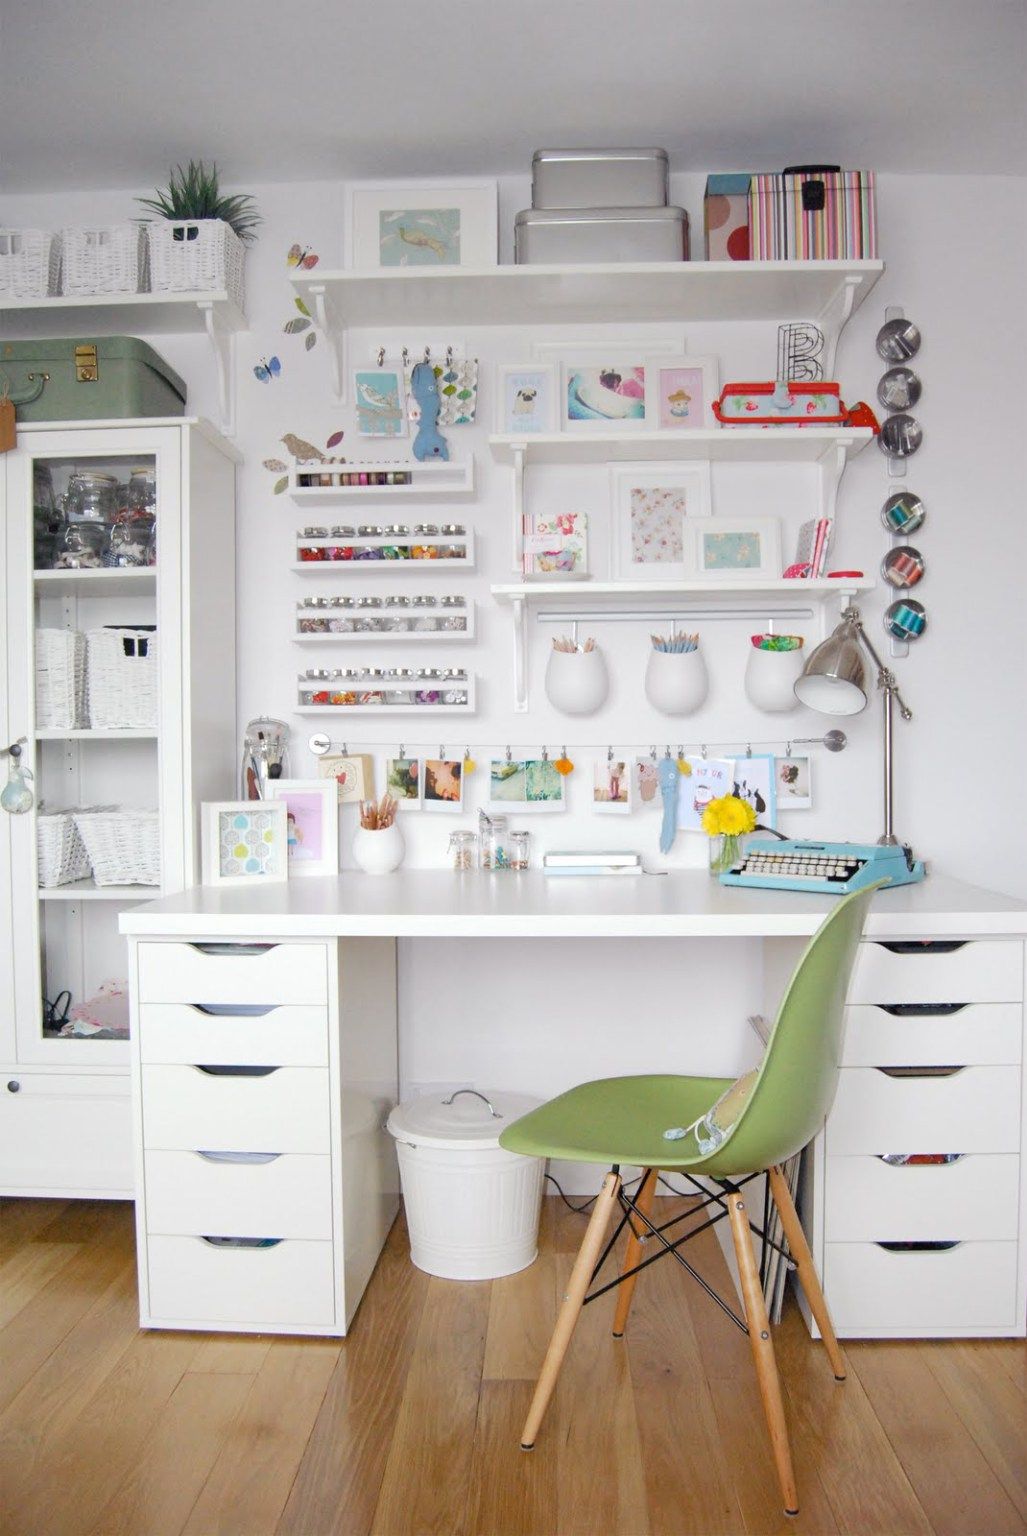 THe Absolute BEST IKEA Craft Room Ideas - the Original!